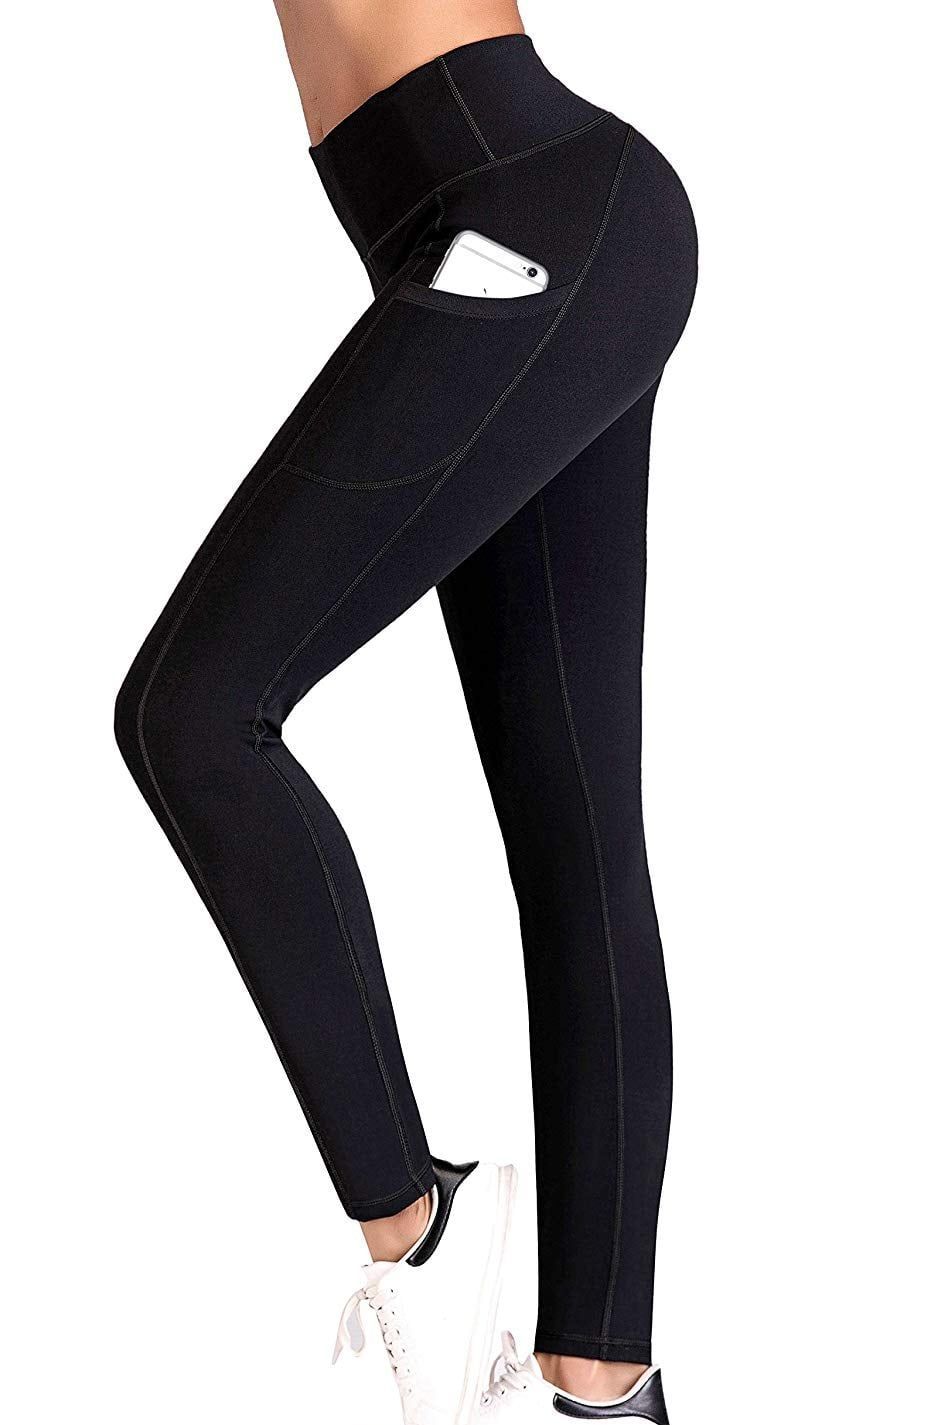 Small, Black Leggings) - IUGA High Waist Yoga Pants with Pockets, Tummy  Control Yoga Capris for Women, 4 Way Stretch Capri Leggings with Pockets